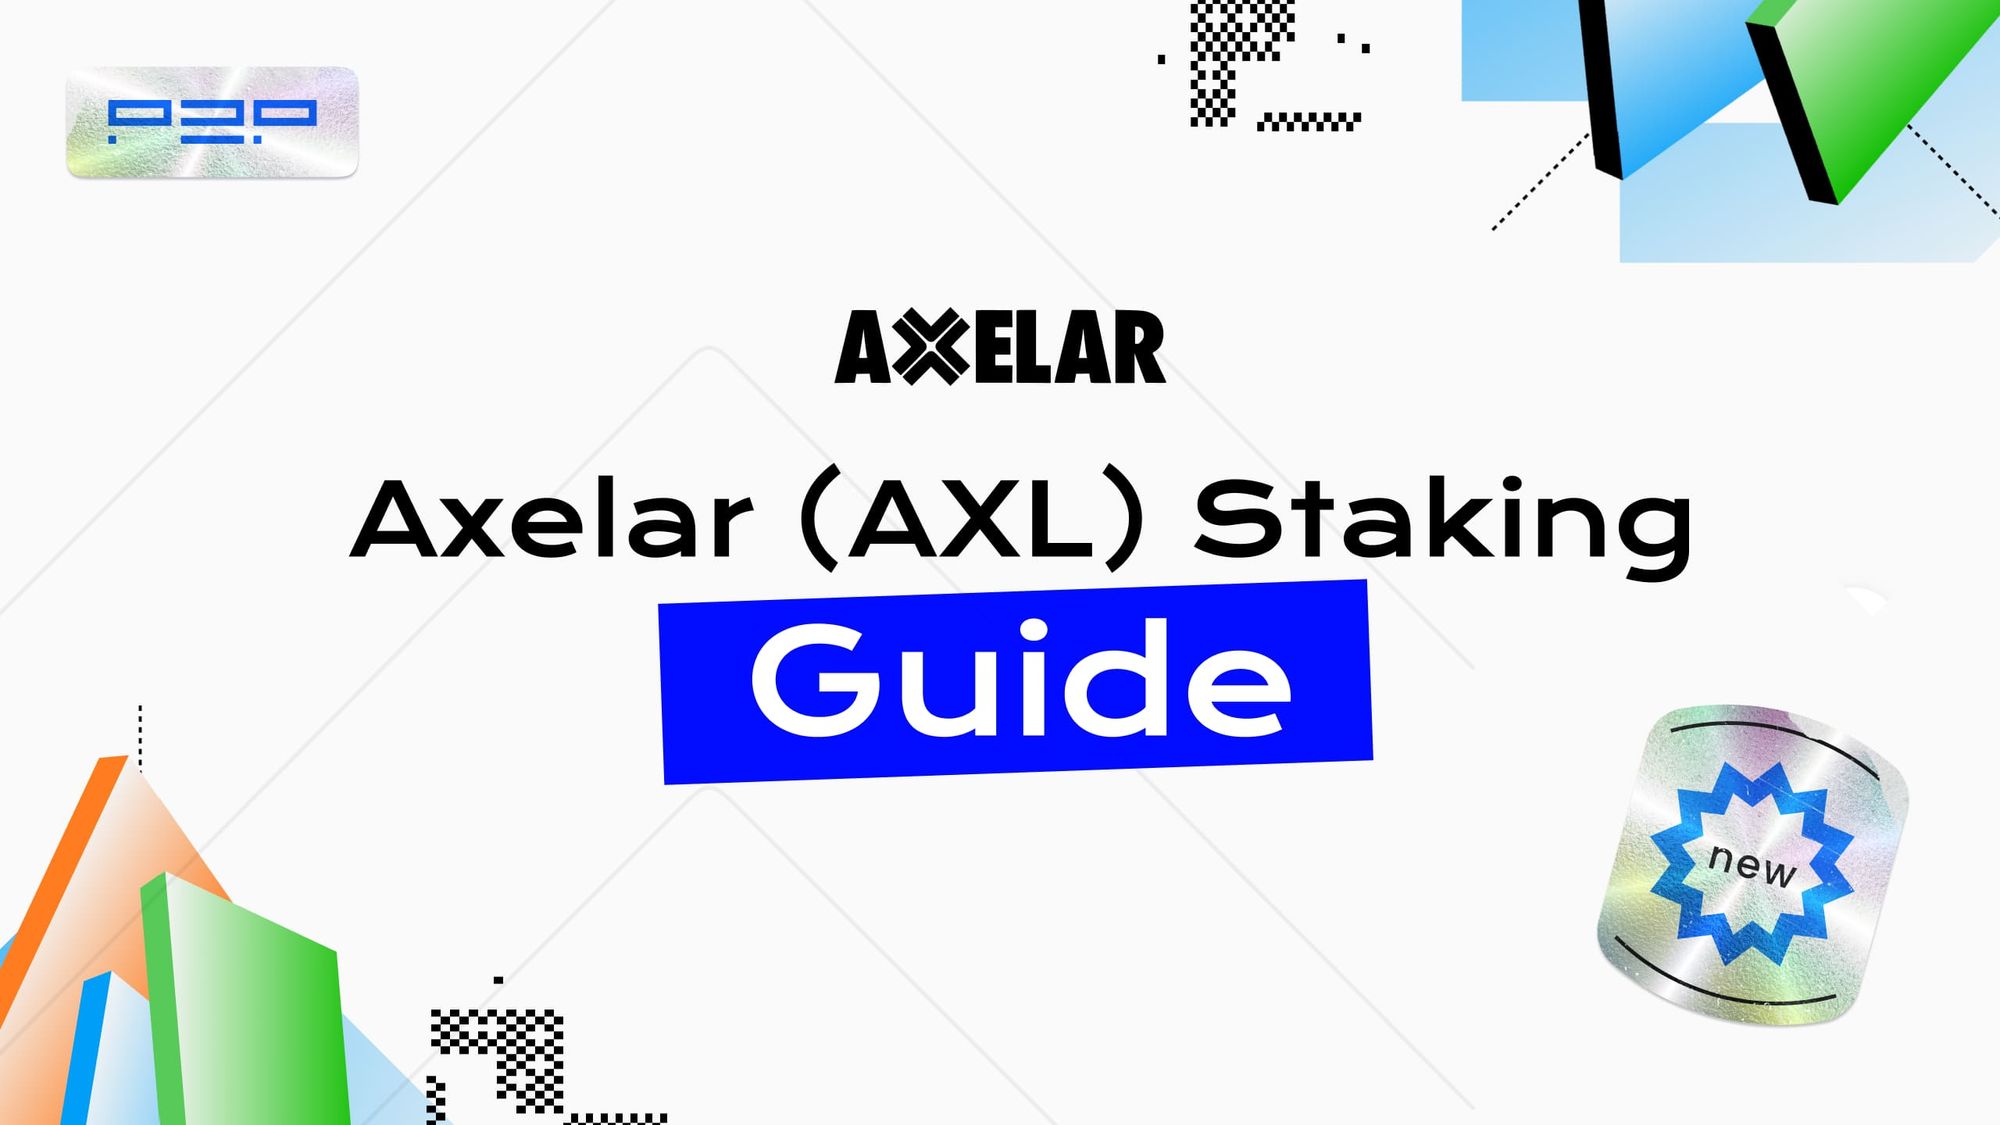 Axelar (AXL) Staking Guide